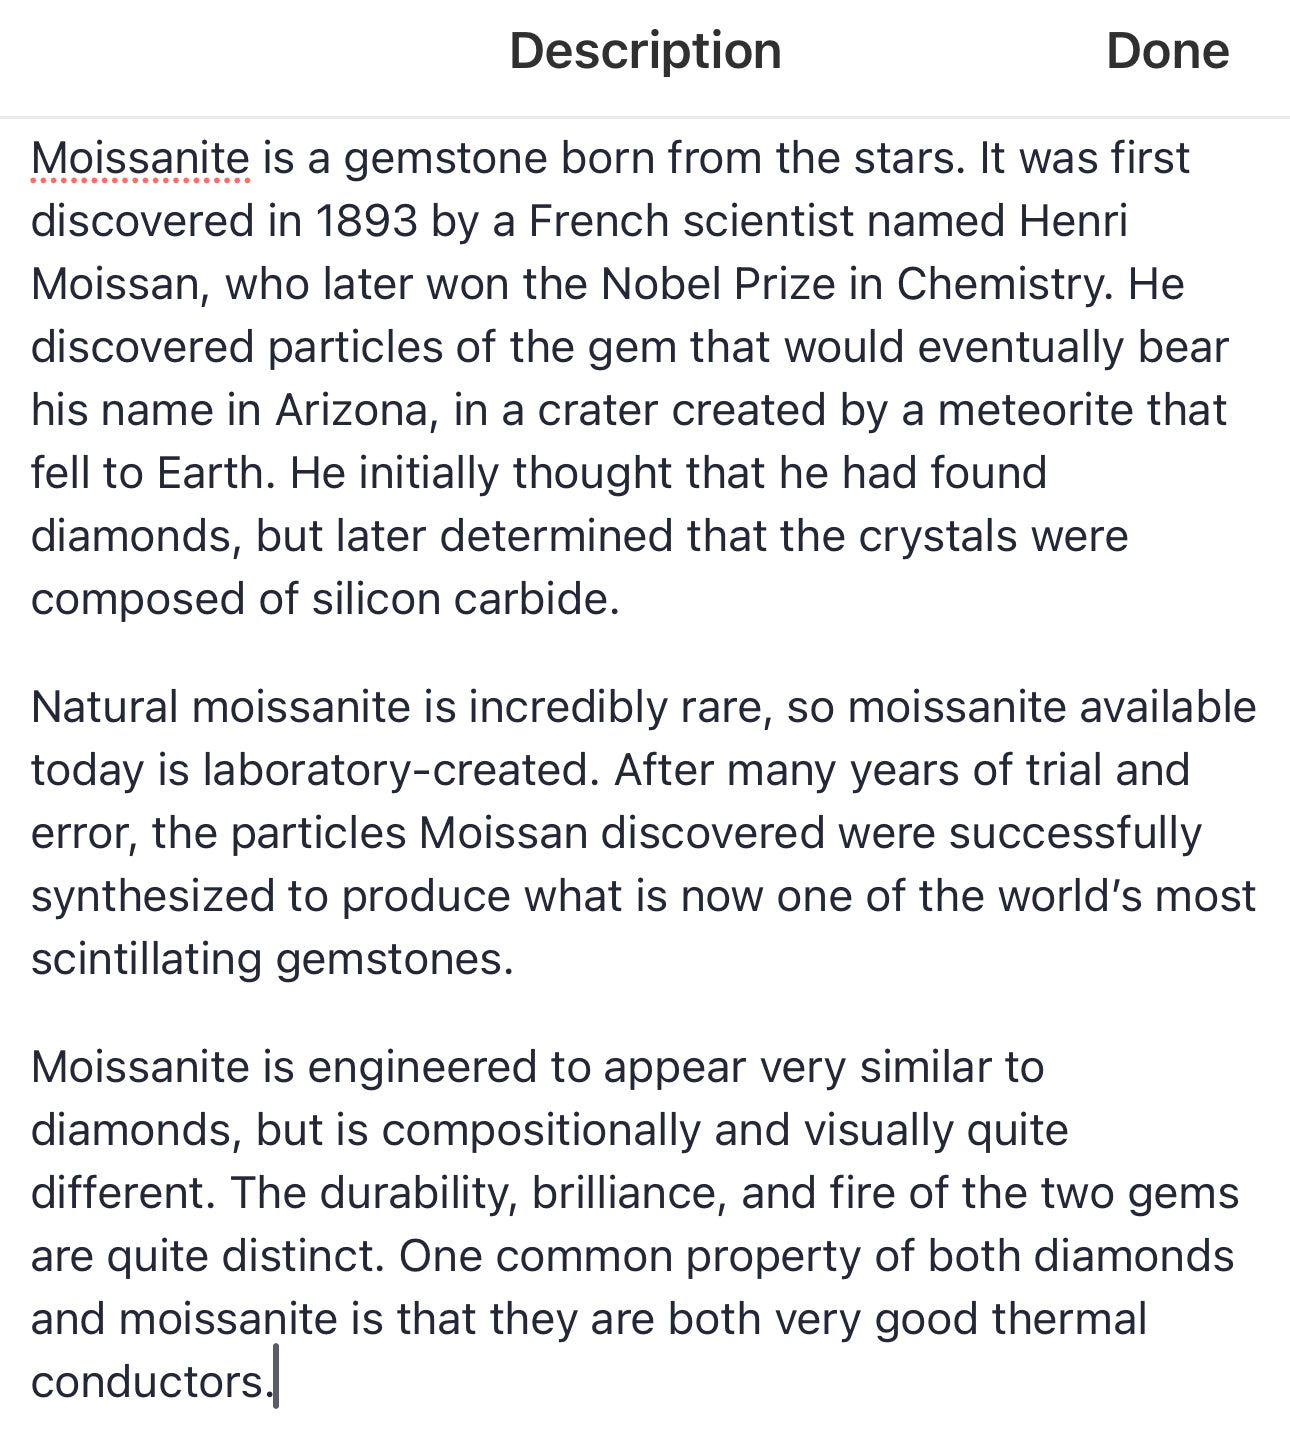 Moissanite Pearl Drop Earrings